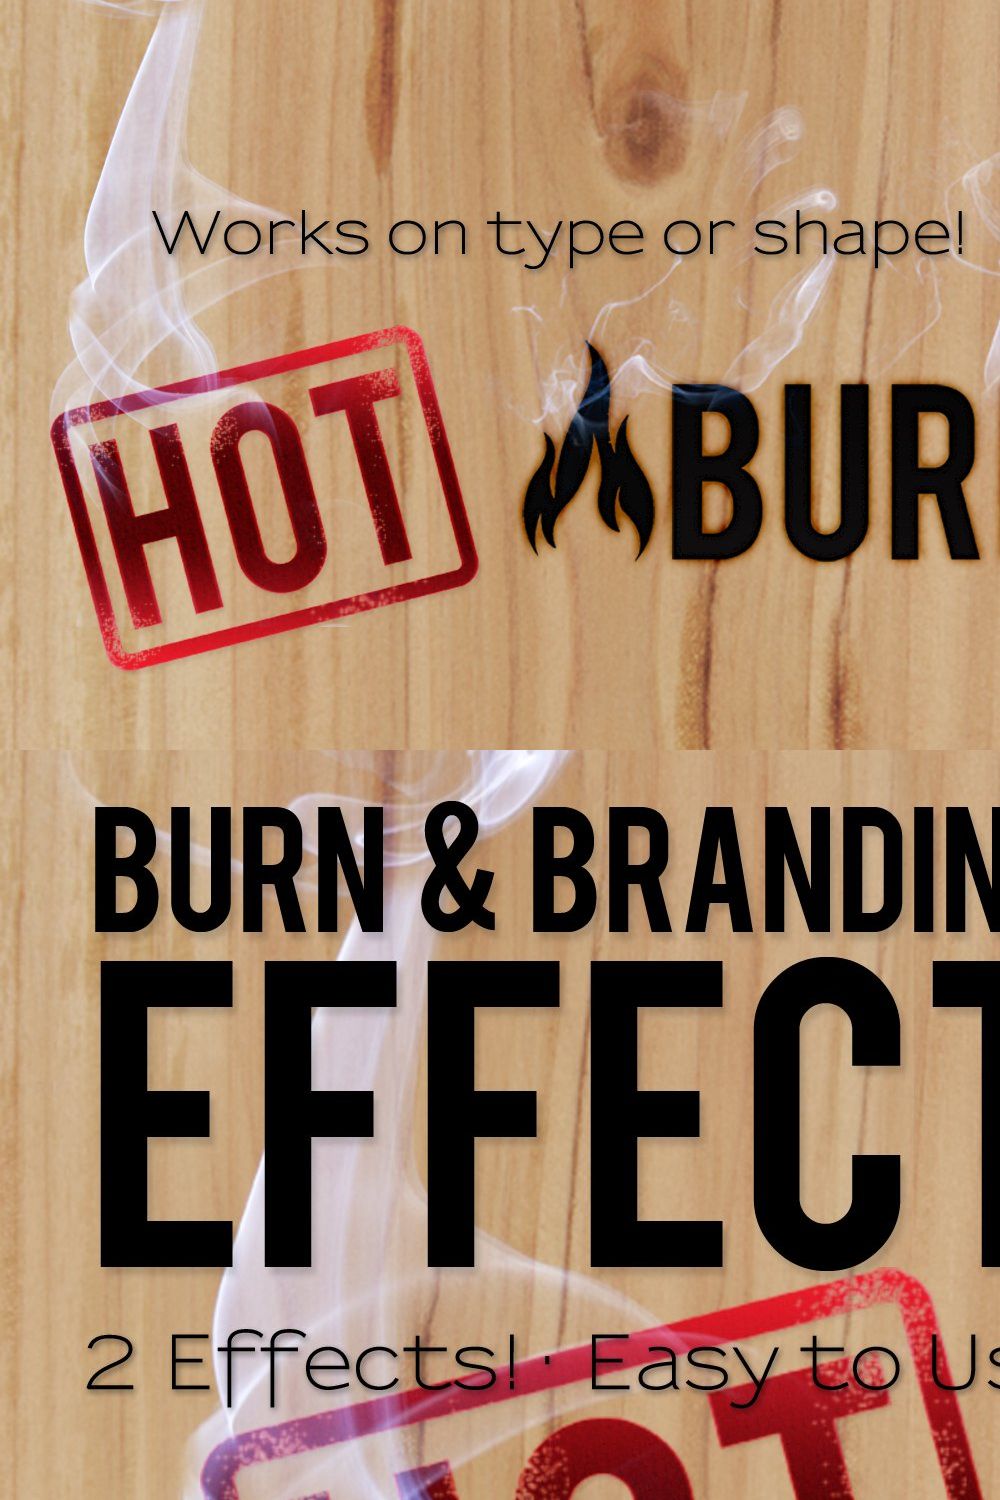 Burn & Branding Effects pinterest preview image.